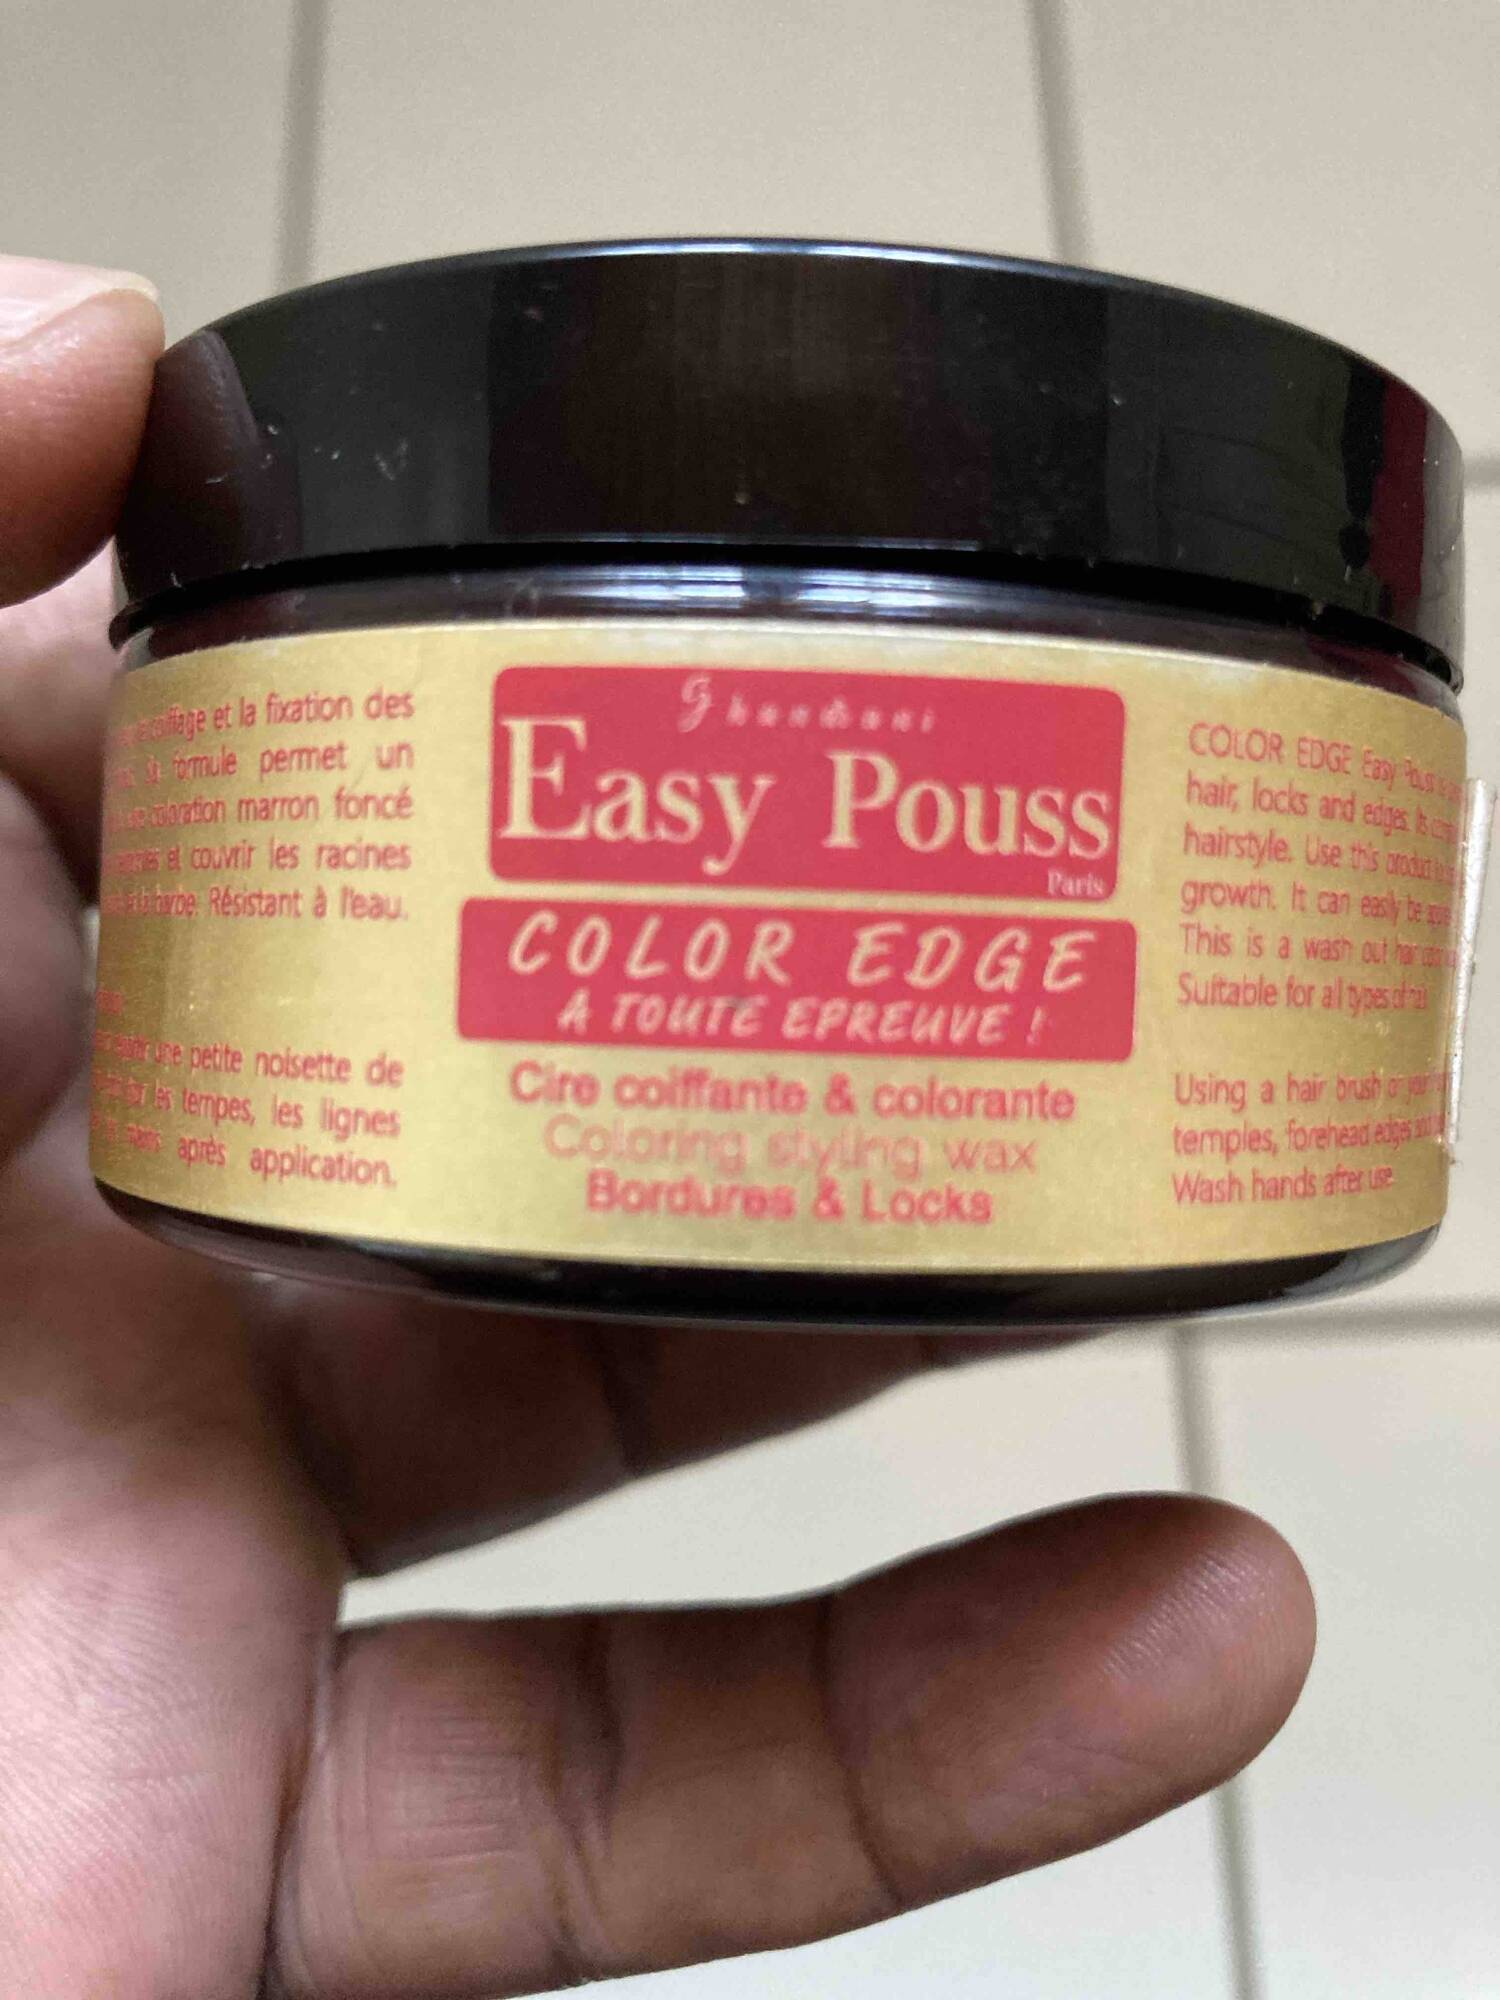 EASY POUSS - Color Edge - Cire coiffante & colorante